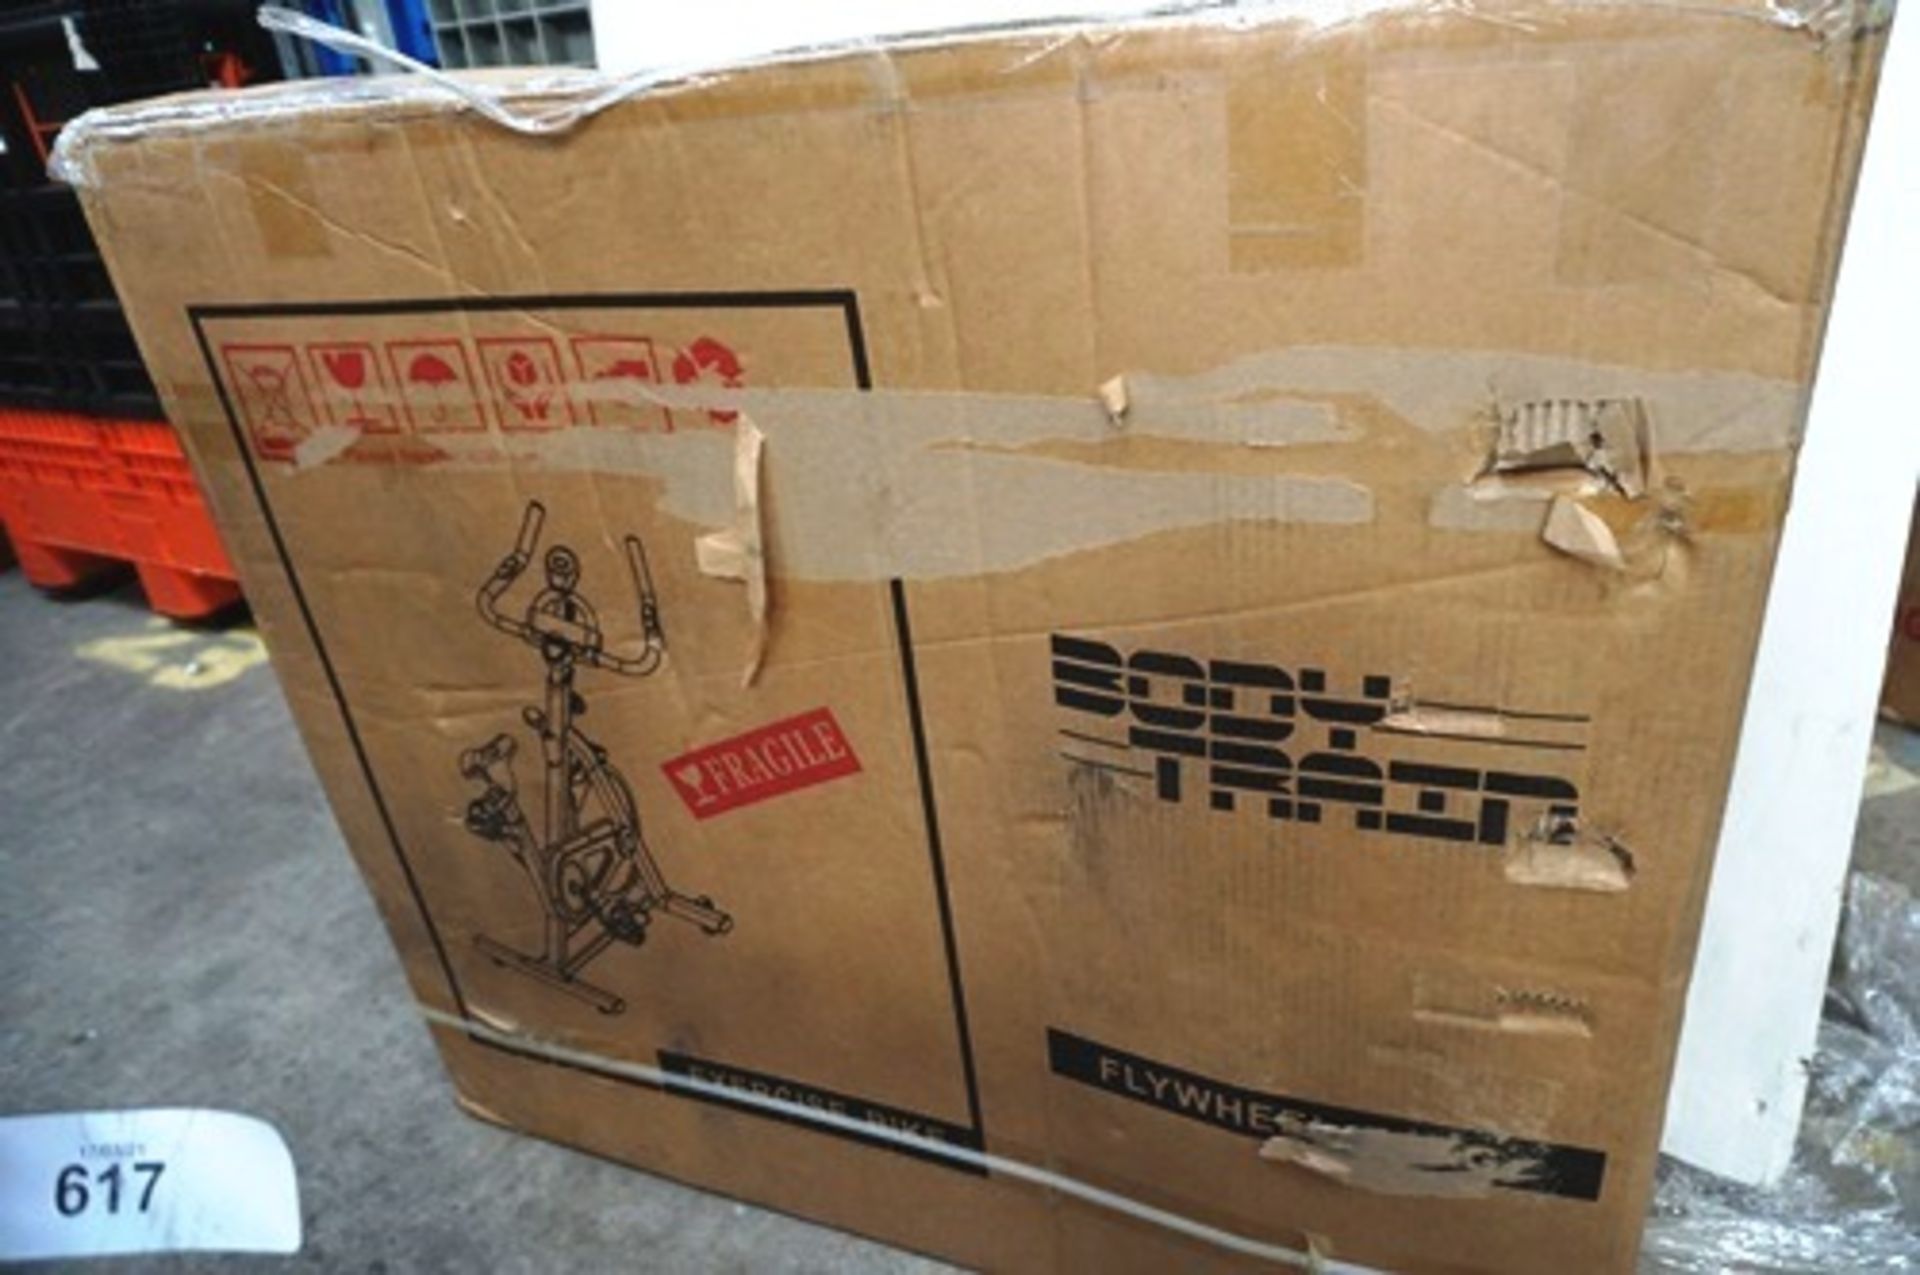 1 x Bodytrain Racer studio style exercise bike, code ES-7021 - Sealed new in box (GSF18)